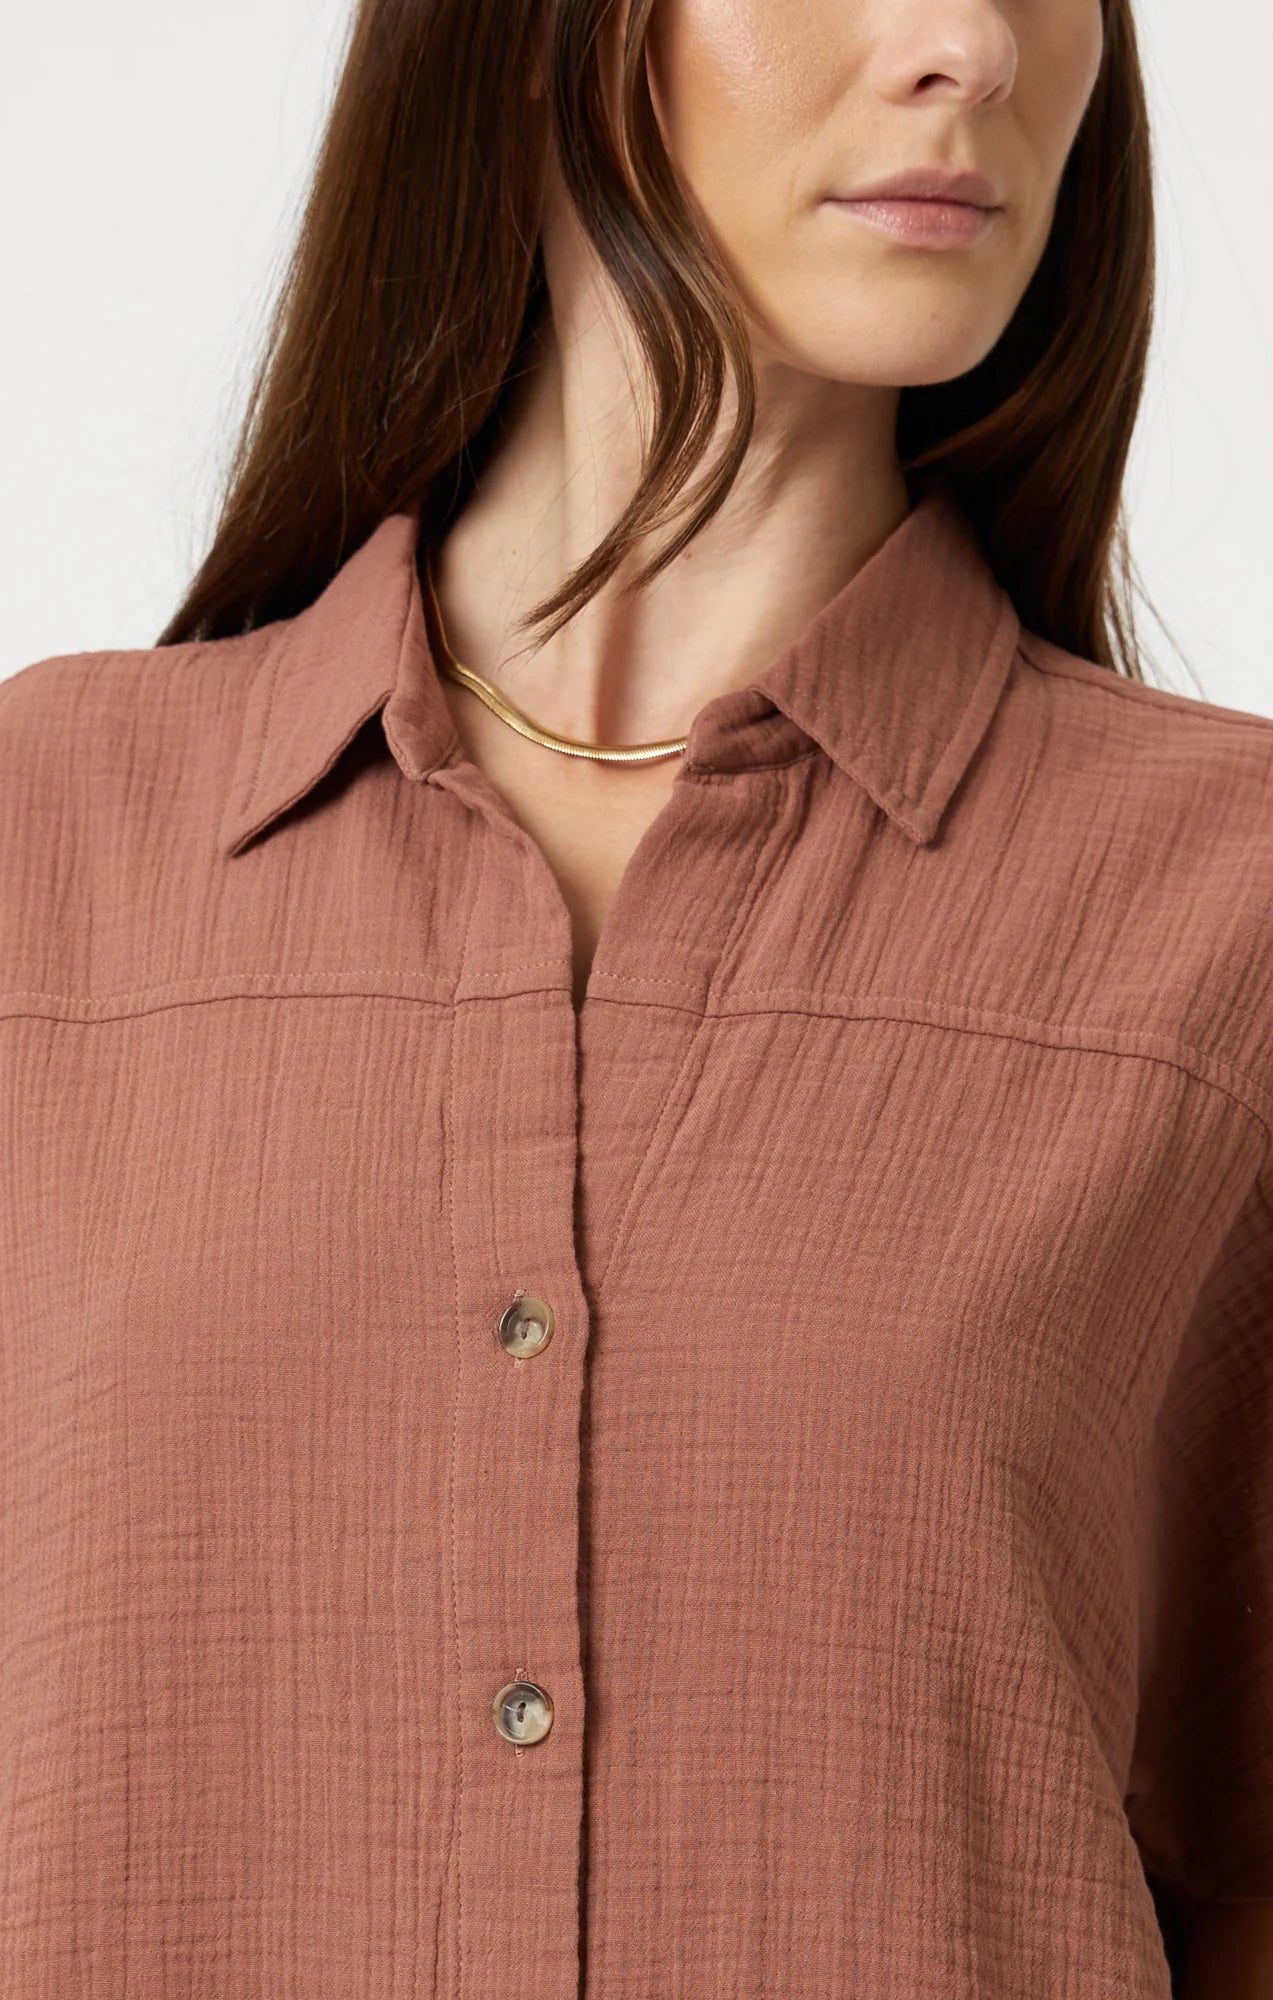 Gauze Short Sleeve Shirt by Mavi - Brownie - Blue Sky Fashions & Lingerie